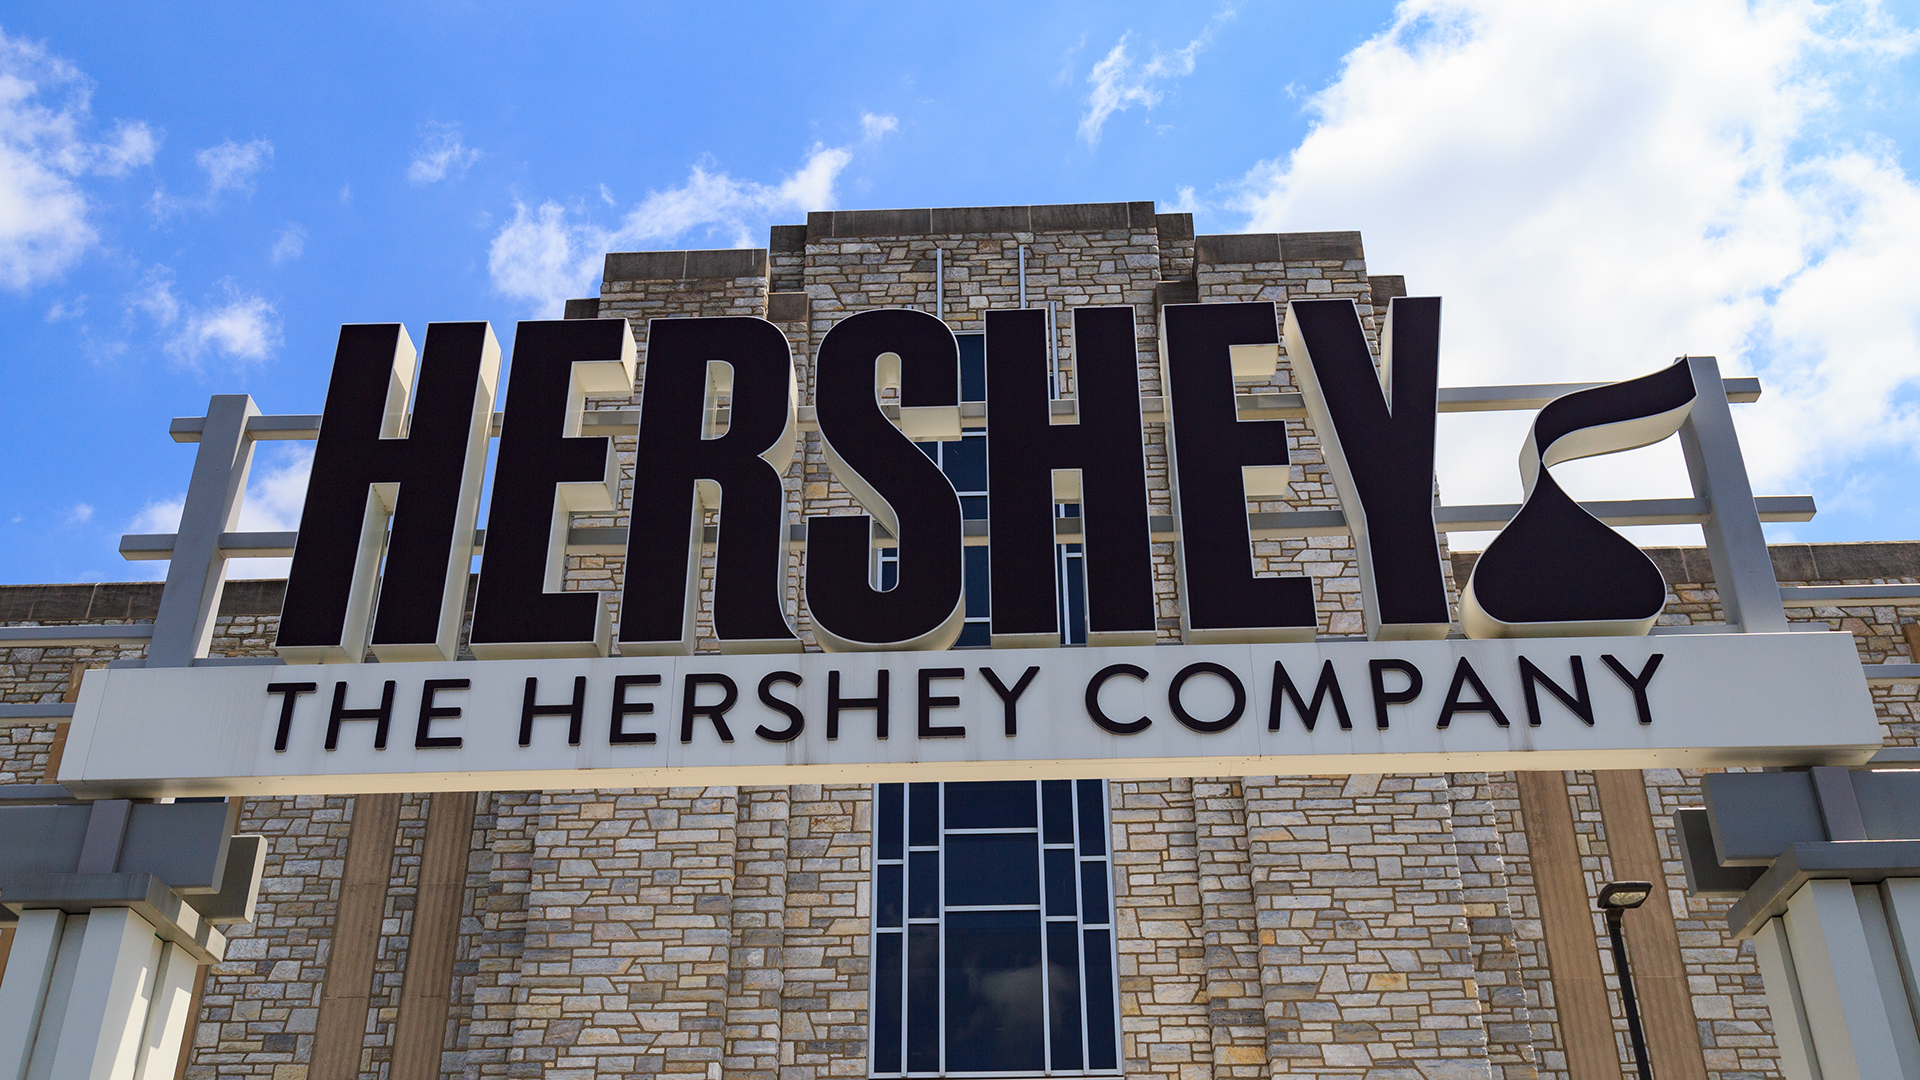 The hershey company. Компания Hershey. Херши город в США. Hershey Company в Пенсильвании, США.. Hershey здание.